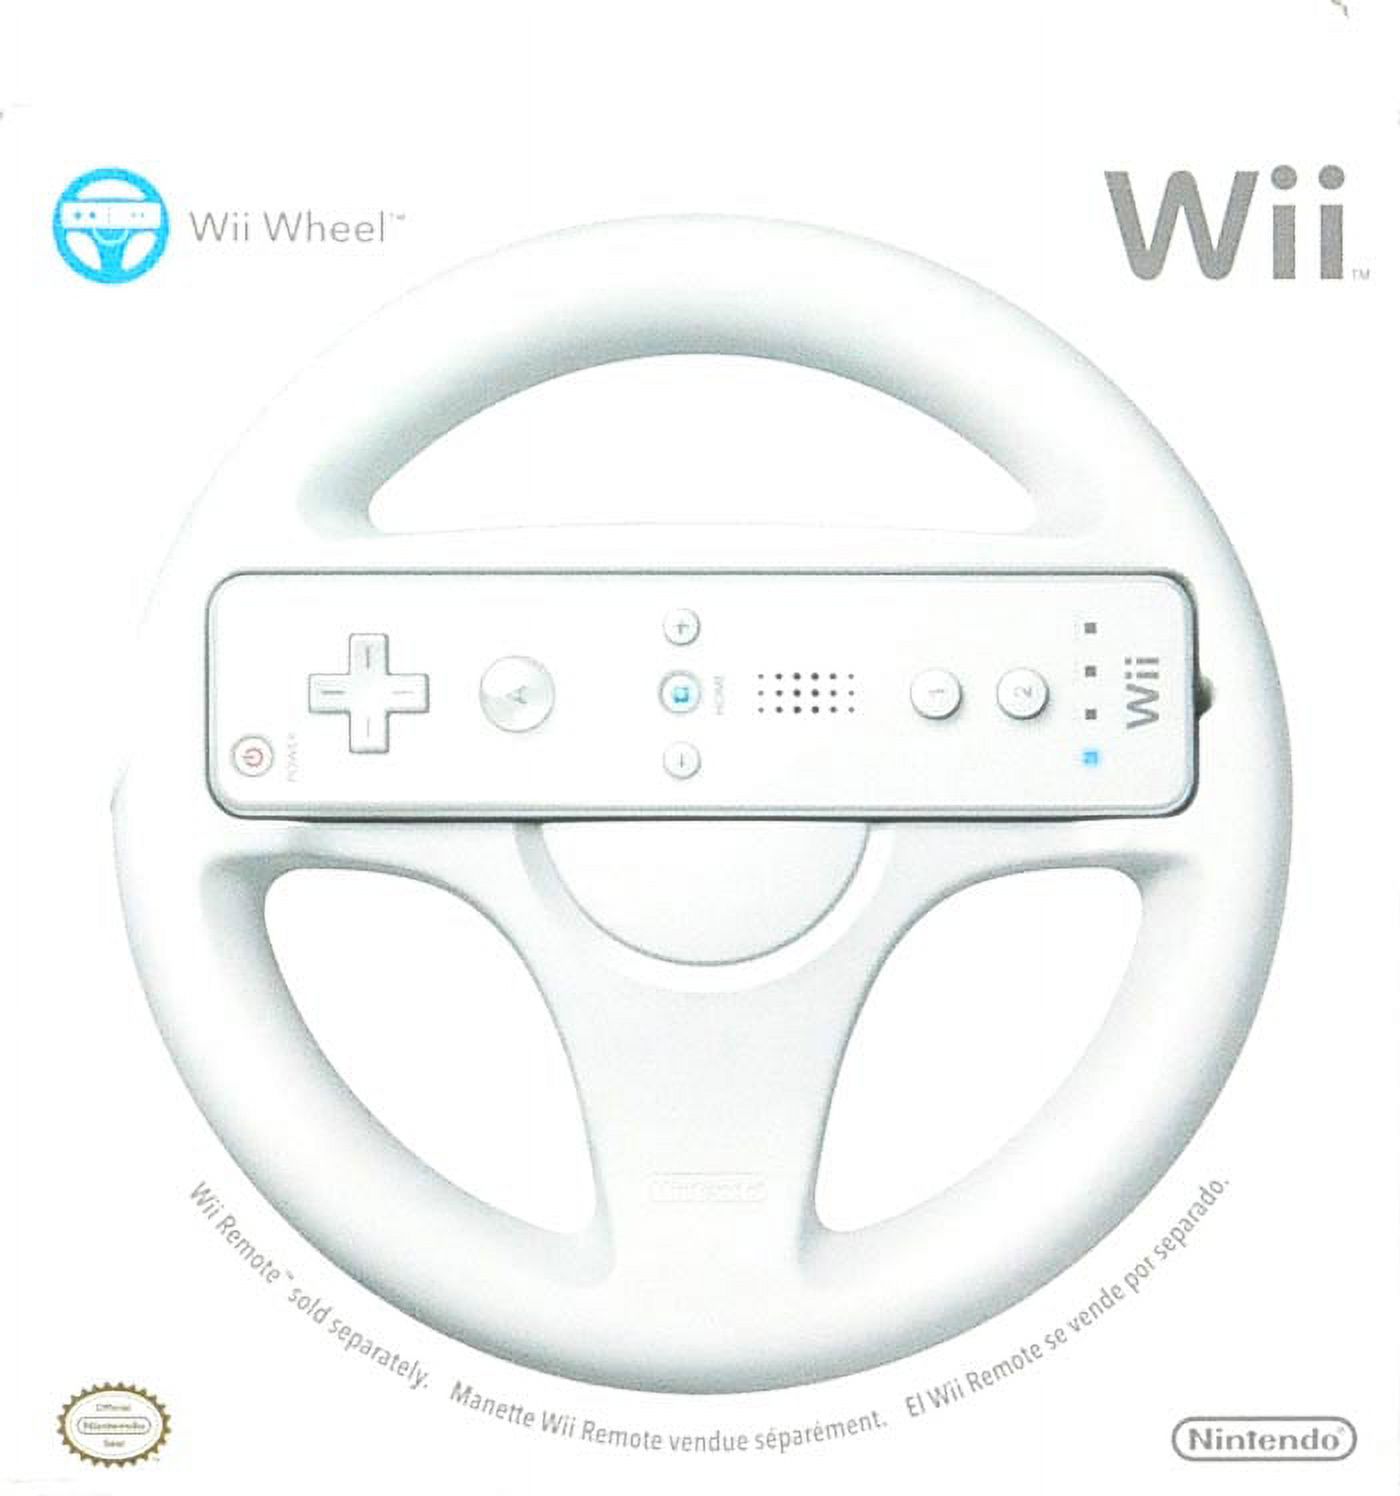 Wheel Controller for Nintendo Wii, White, RVLAHA, 00045496890216 - image 2 of 4